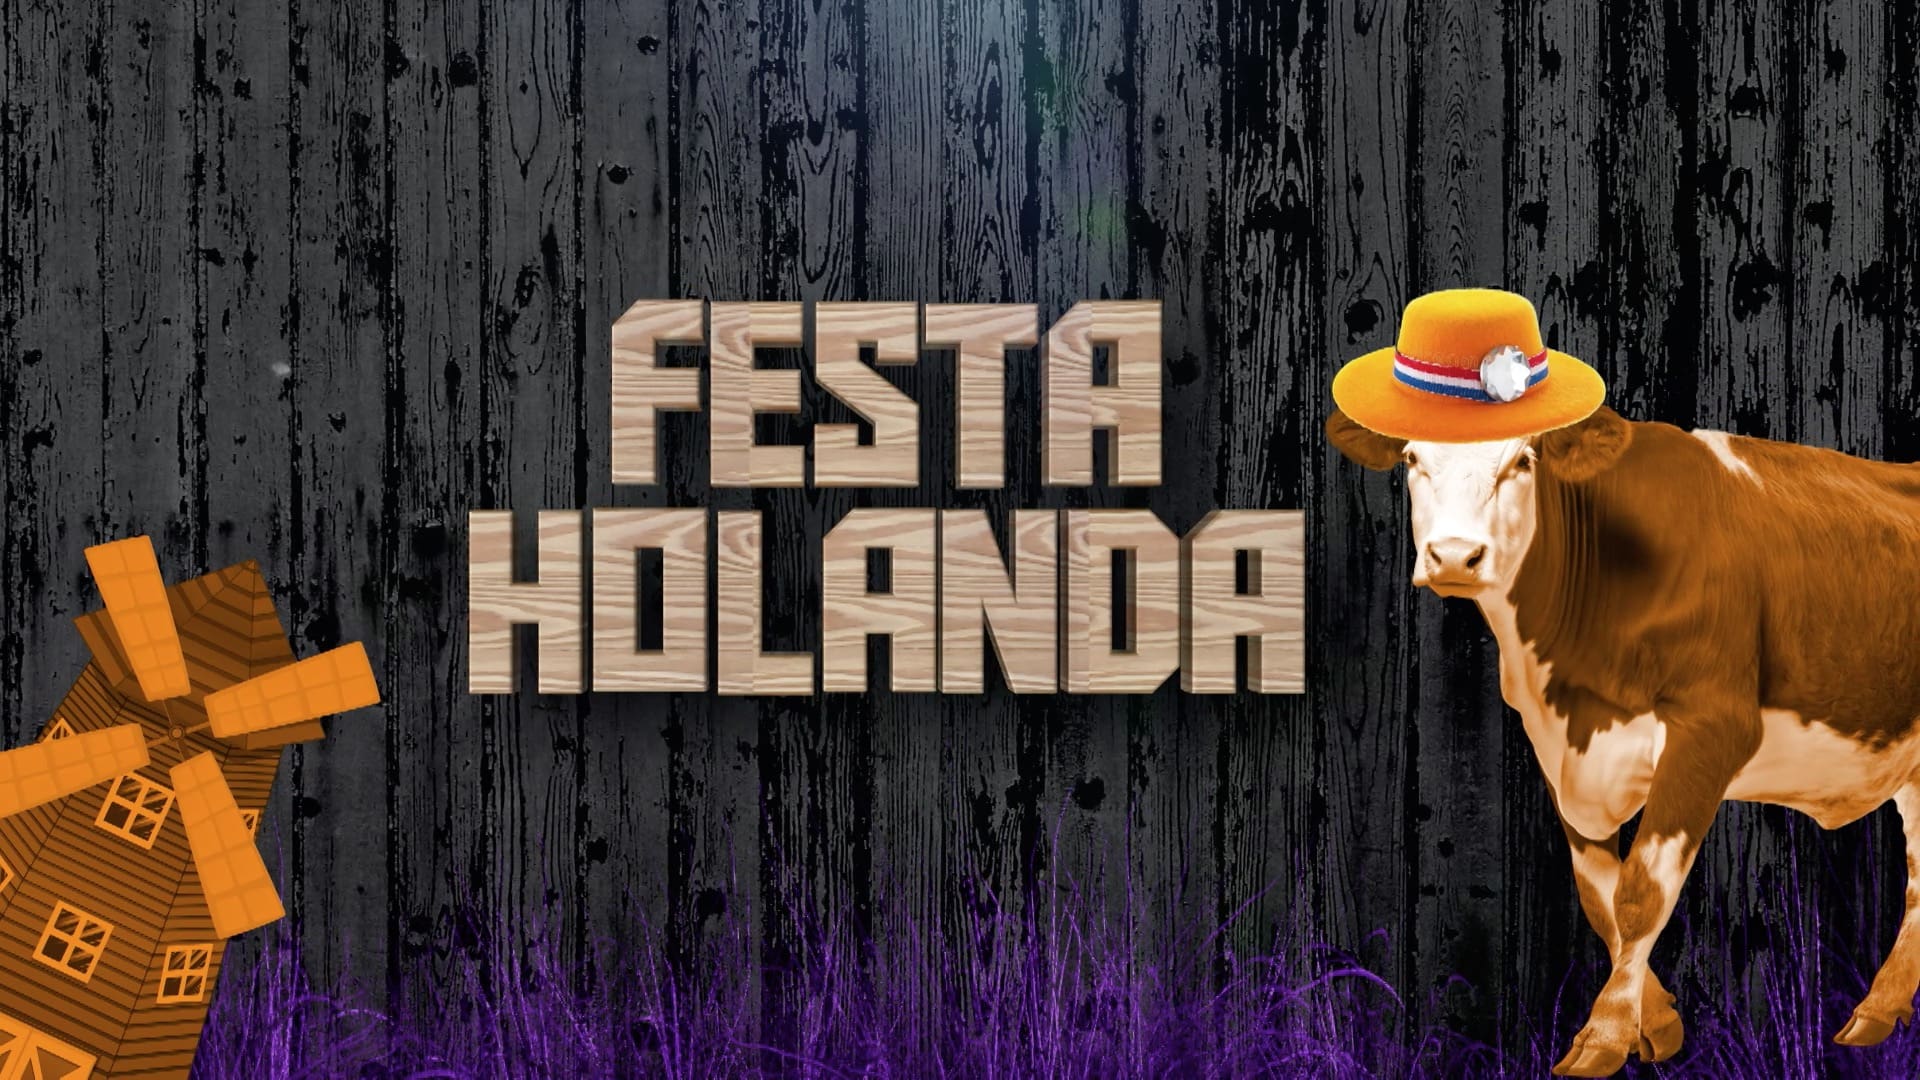 A 'Festa Holanda'! - E69 (promo)